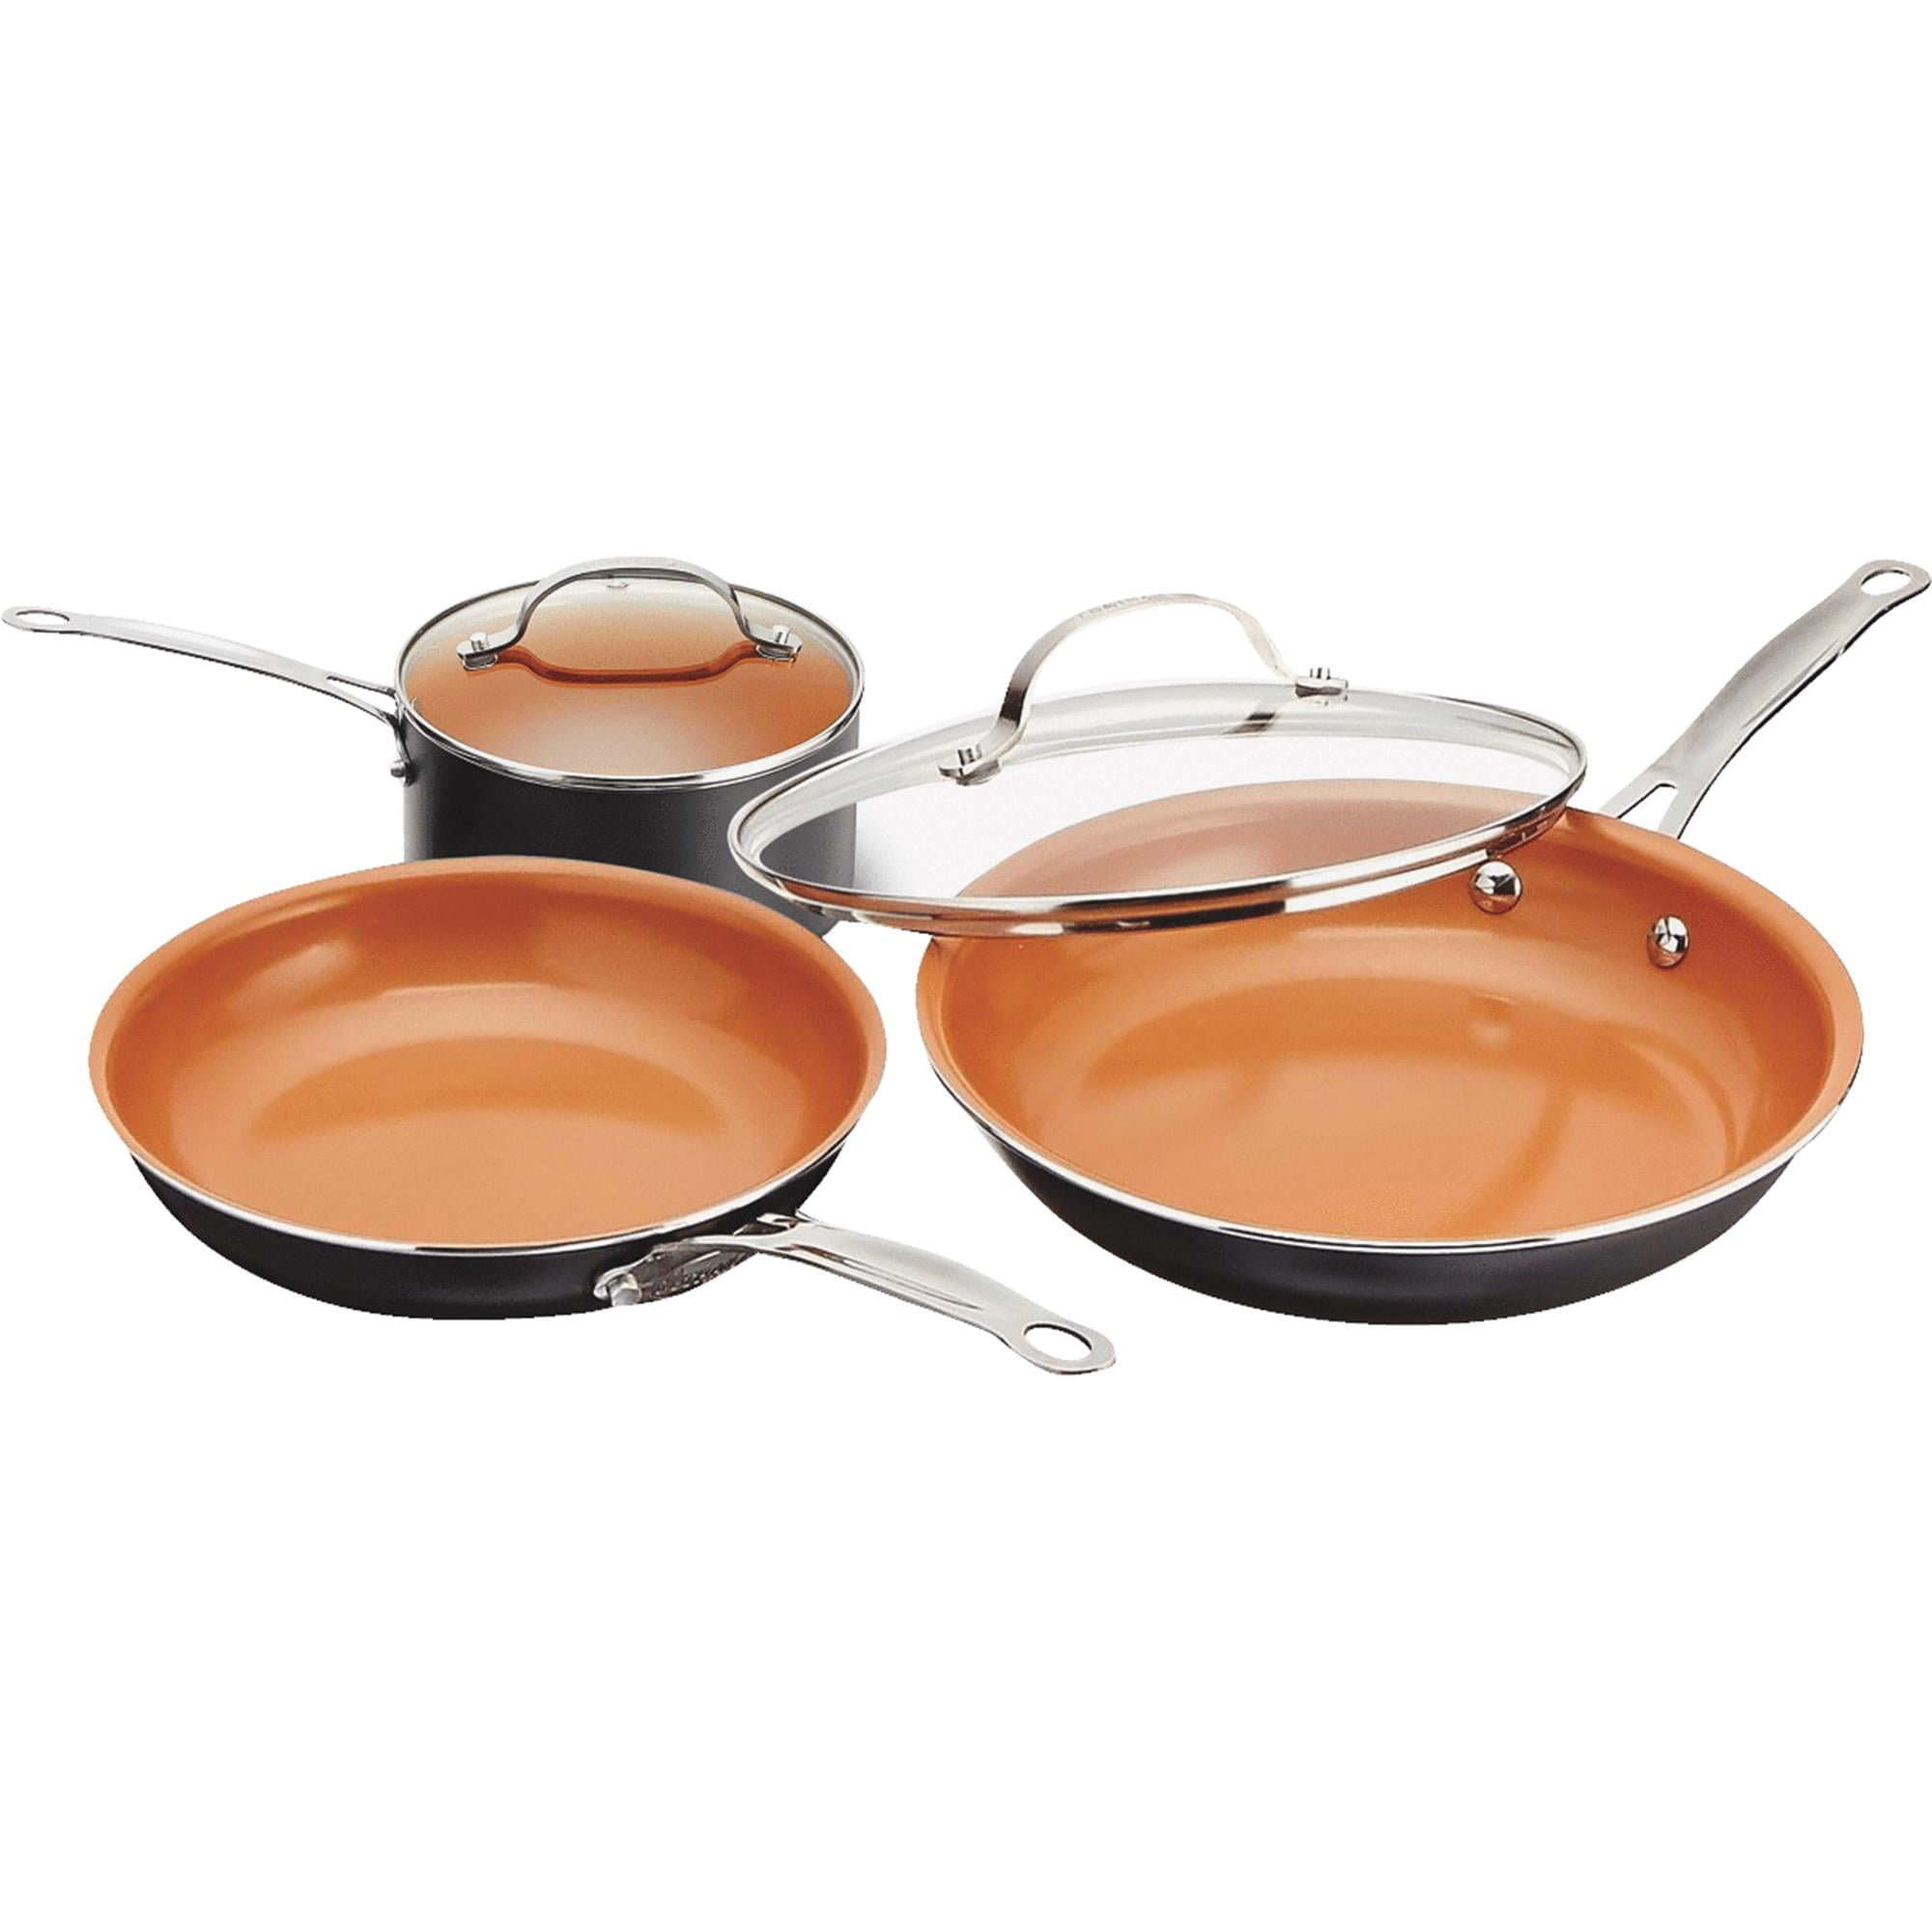 5 Piece Cookware Set Nonstick Pots Pans Home Kitchen Cooking Copper Gotham Steel 